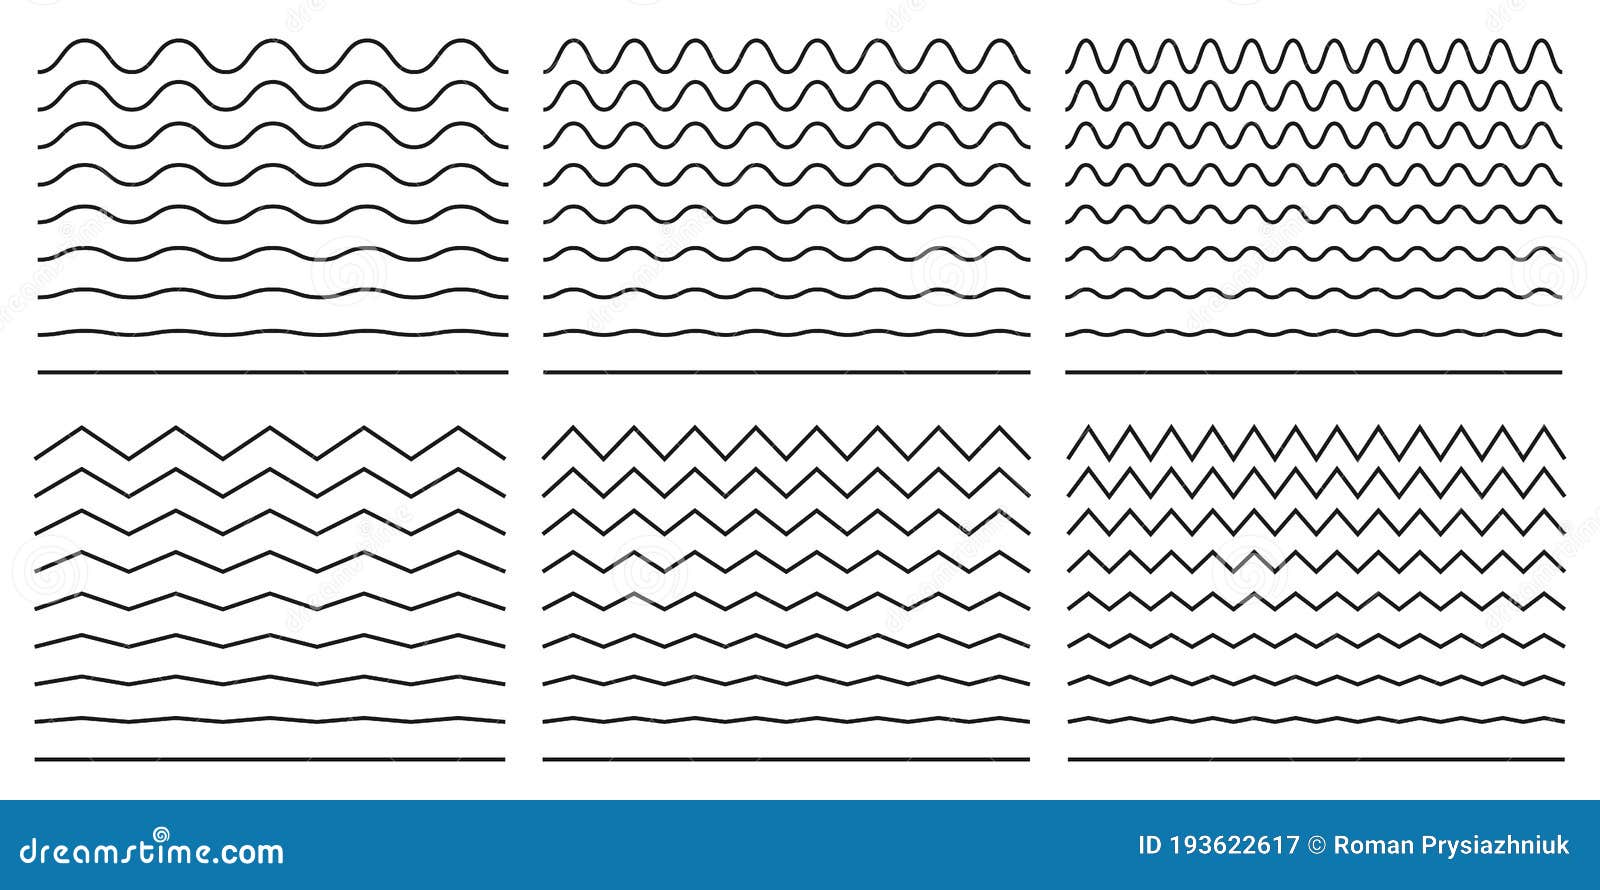 Seamless Wavy Line and Zigzag Patterns Set. Horizontal Curvy Waves